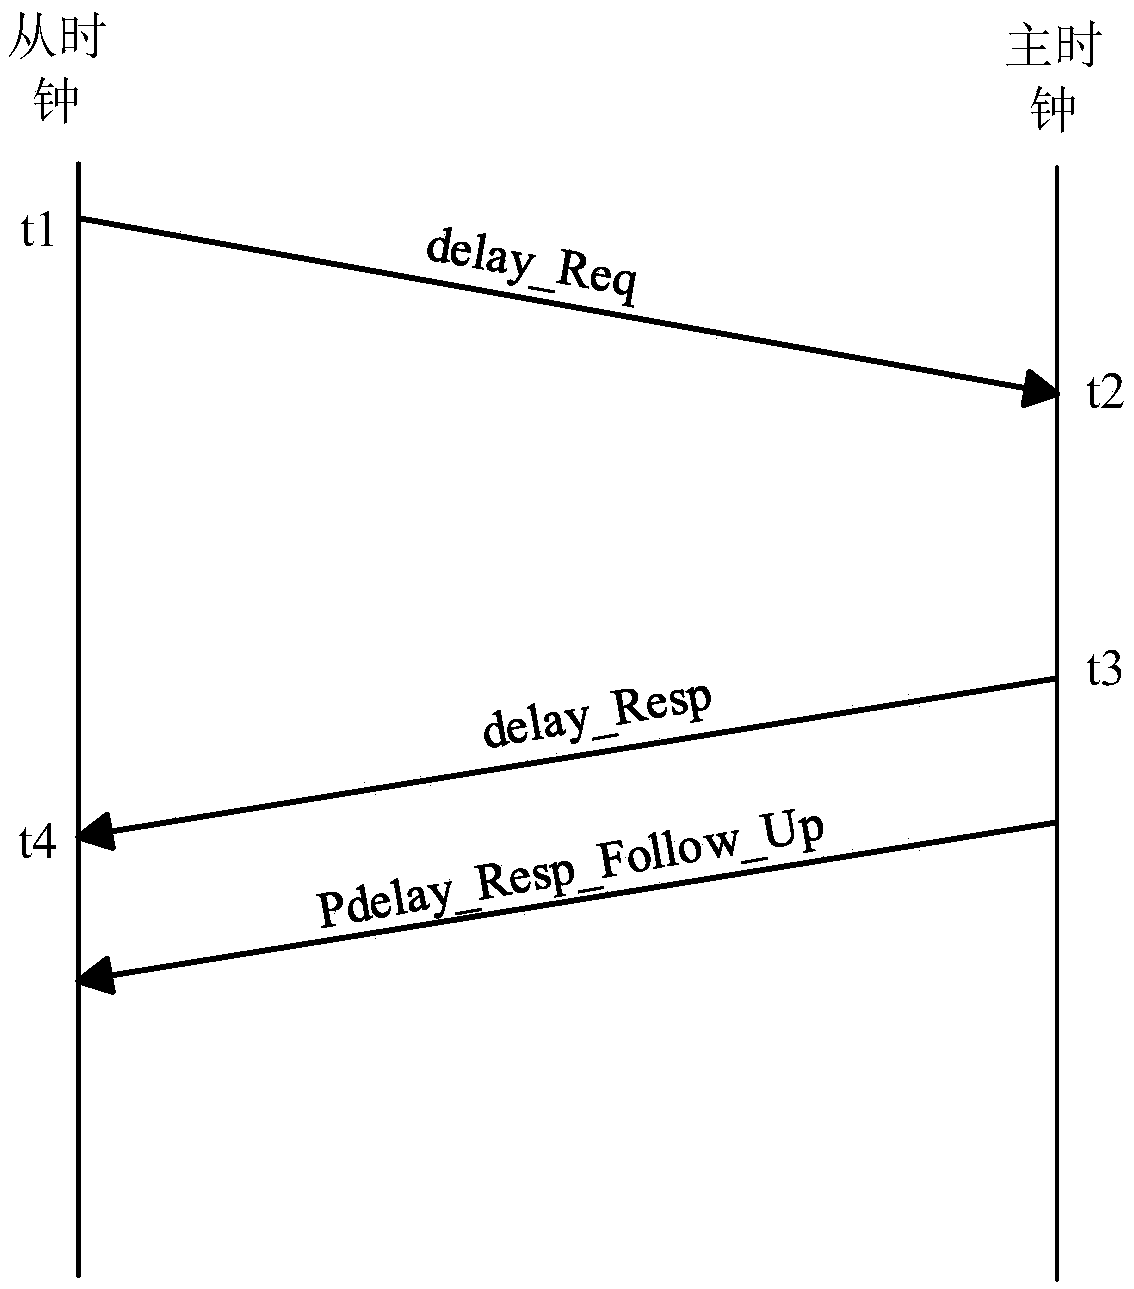 Clock synchronization method based on delay measurement